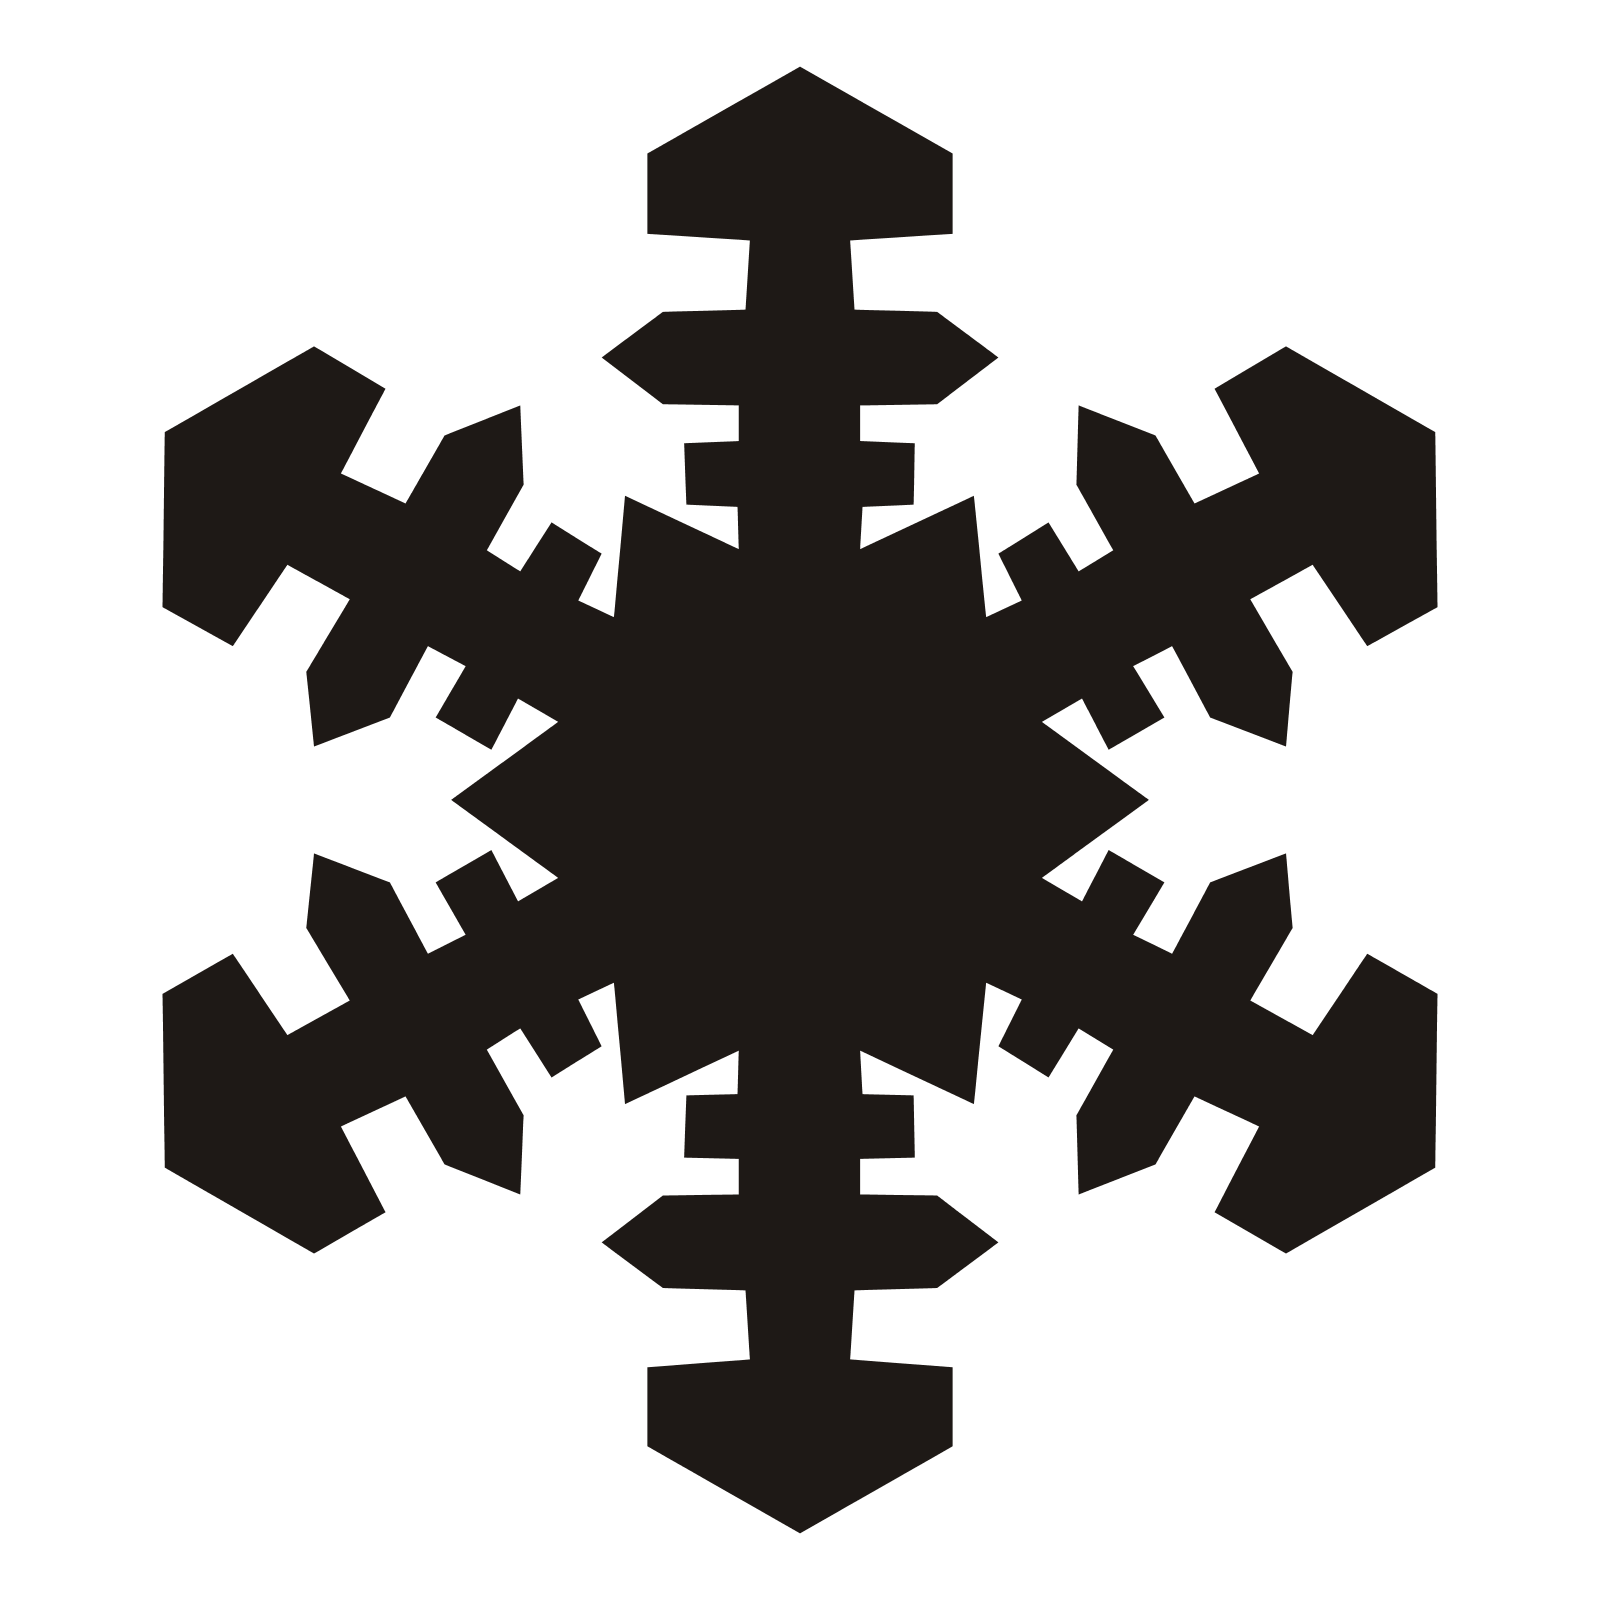 Snowflake Vector Art - Clipart library